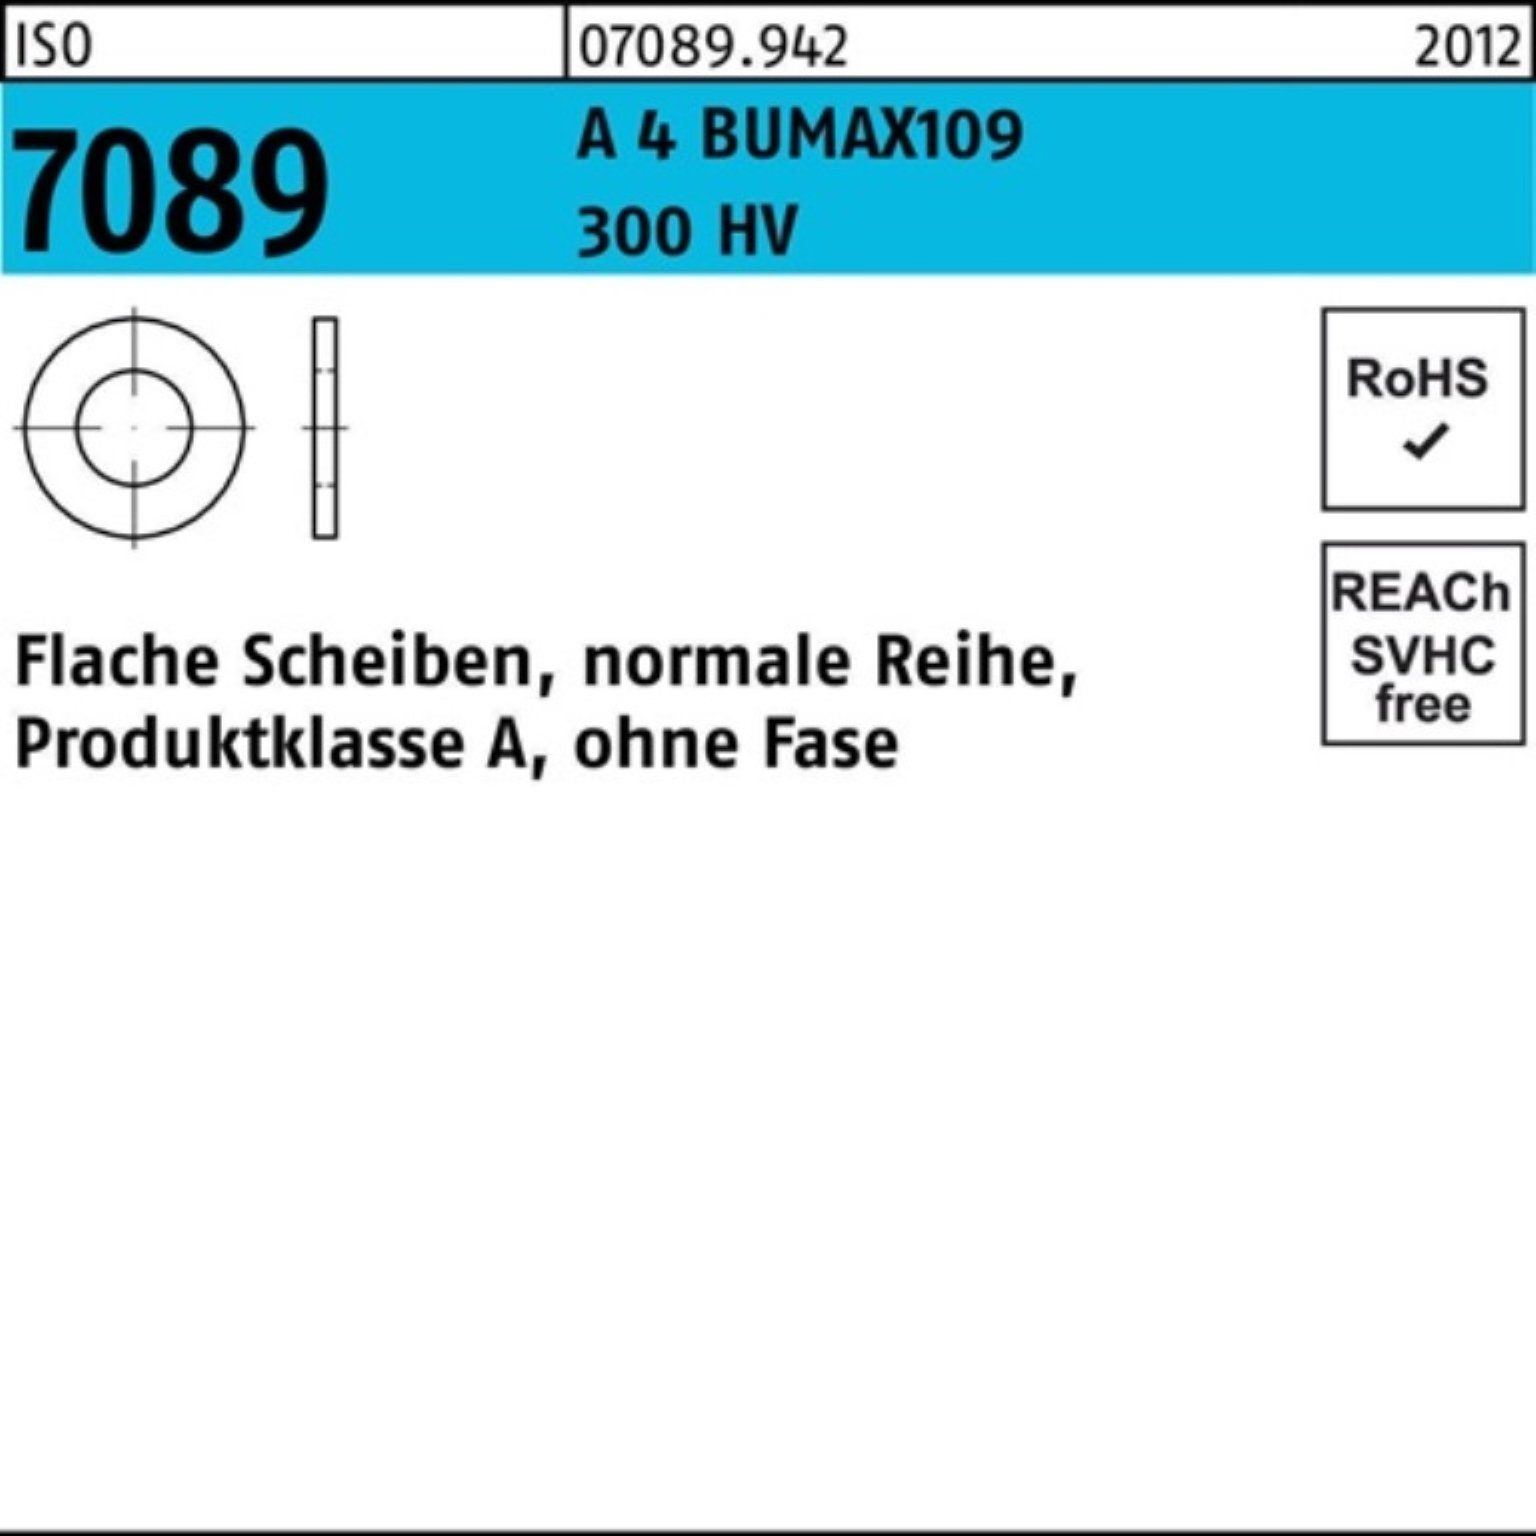 Bufab Unterlegscheibe 4 7089 A HV Unterlegscheibe BUMAX109 o.Fase Pack 100er 300 10 ISO 100